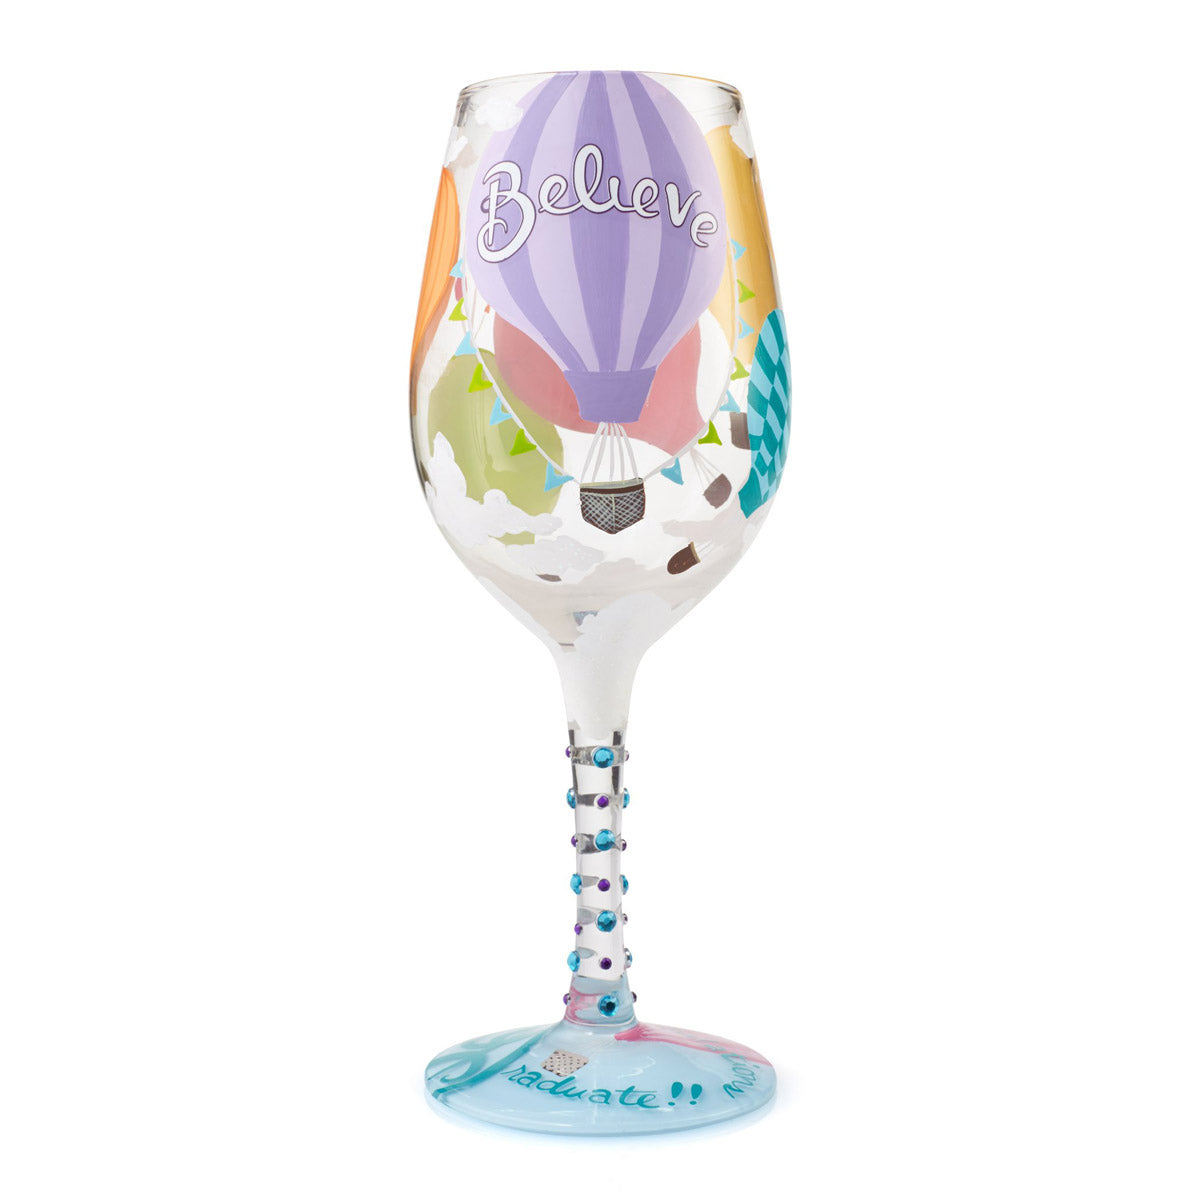 Lolita Graduate Wine Glass -"Reach for the Sky"